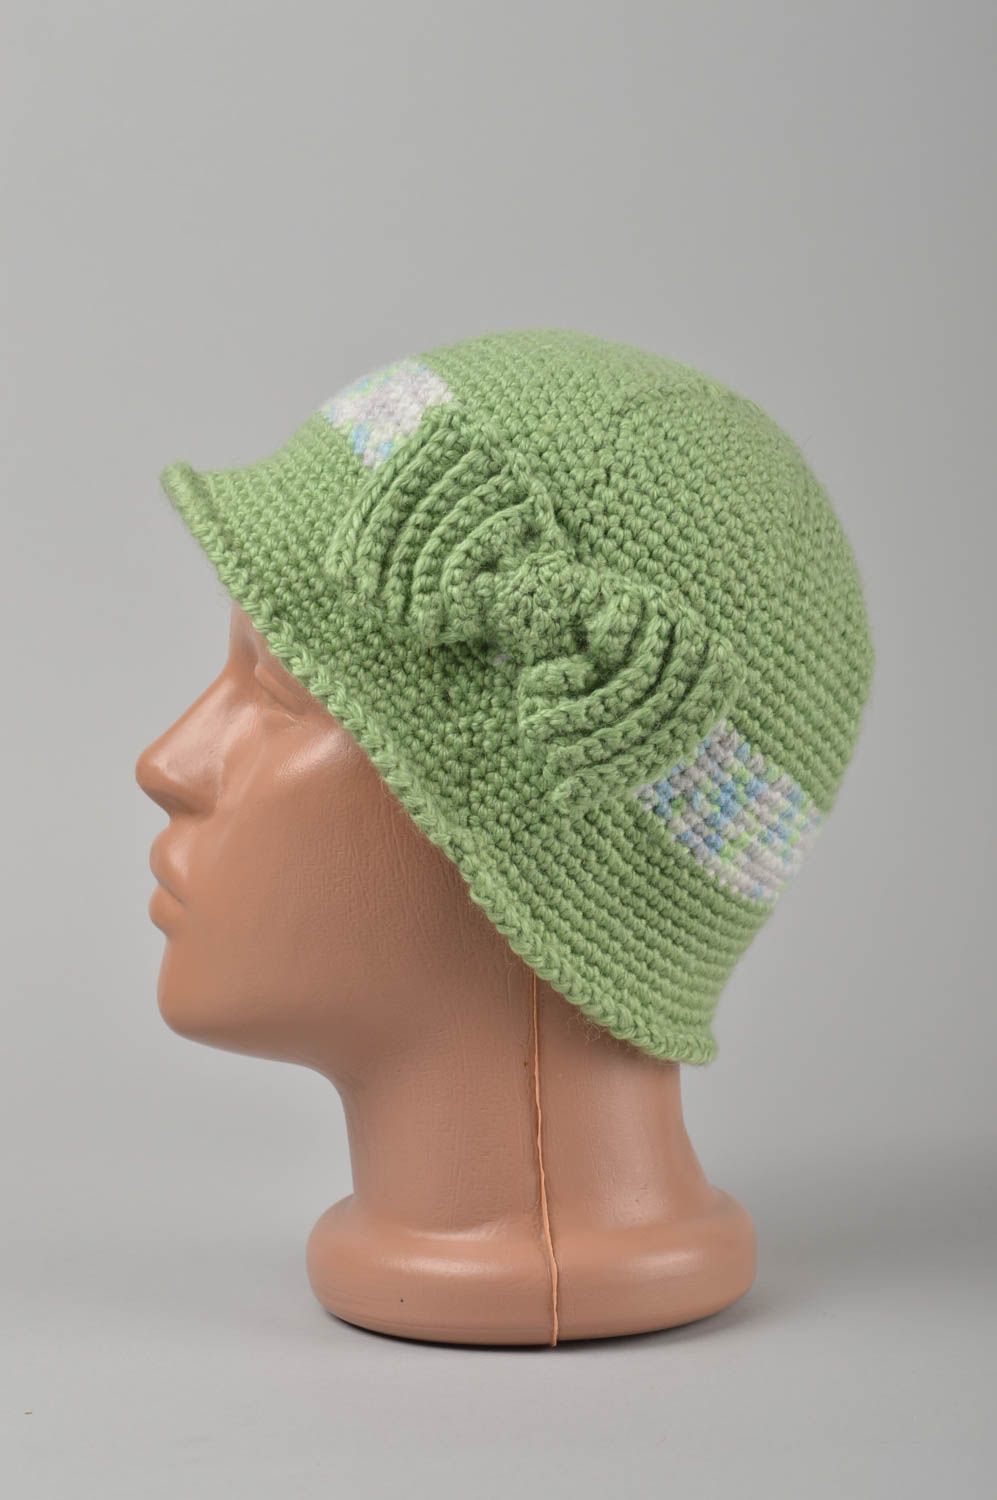 Handmade hat designer hat green hat with bow crocheted hat gift ideas warm hat photo 3